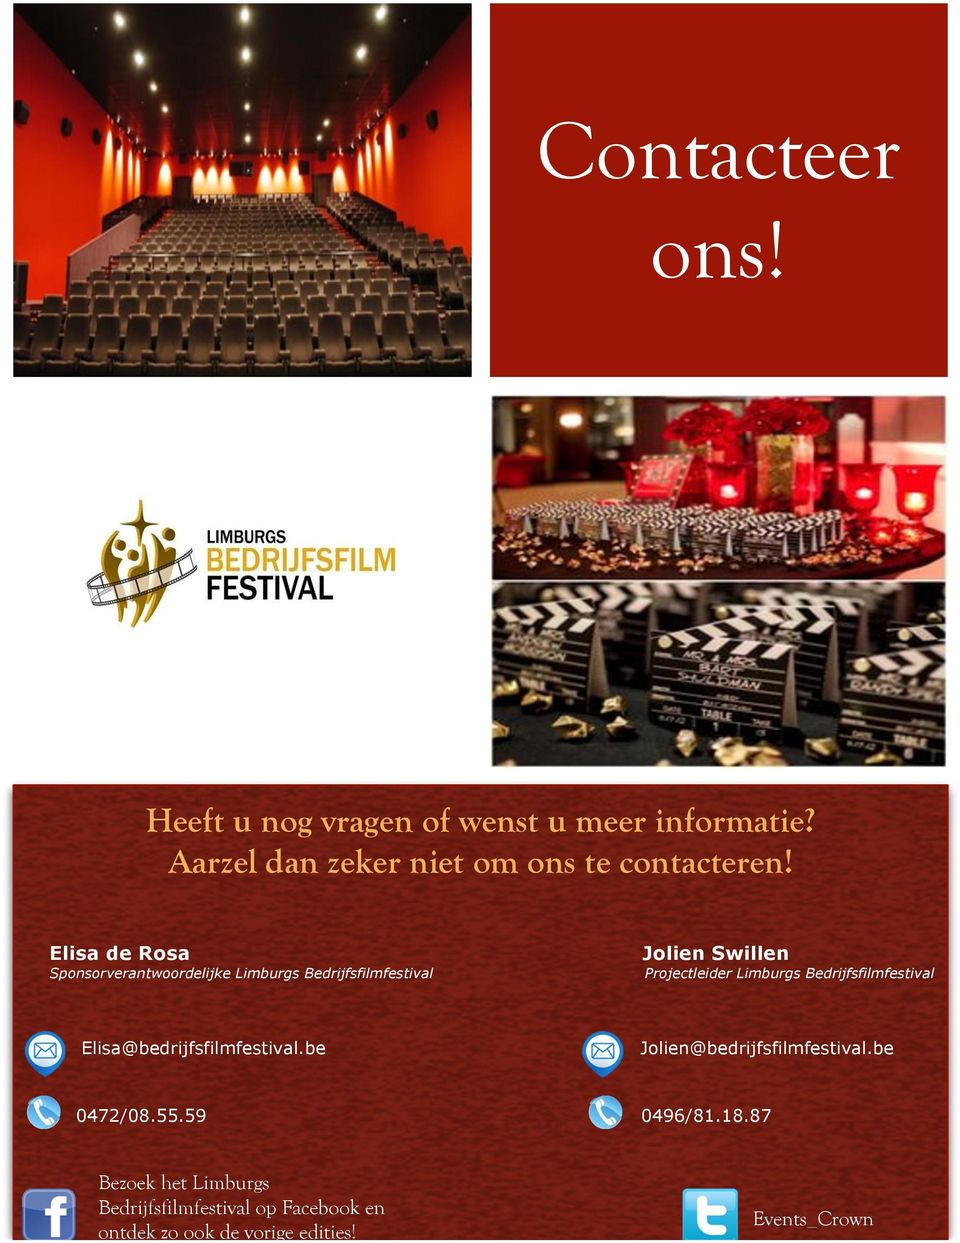 Bedrijfsfilmfestival Elisa@bedrijfsfilmfestival.be Jolien@bedrijfsfilmfestival.be 0472/08.55.59 0496/81.18.